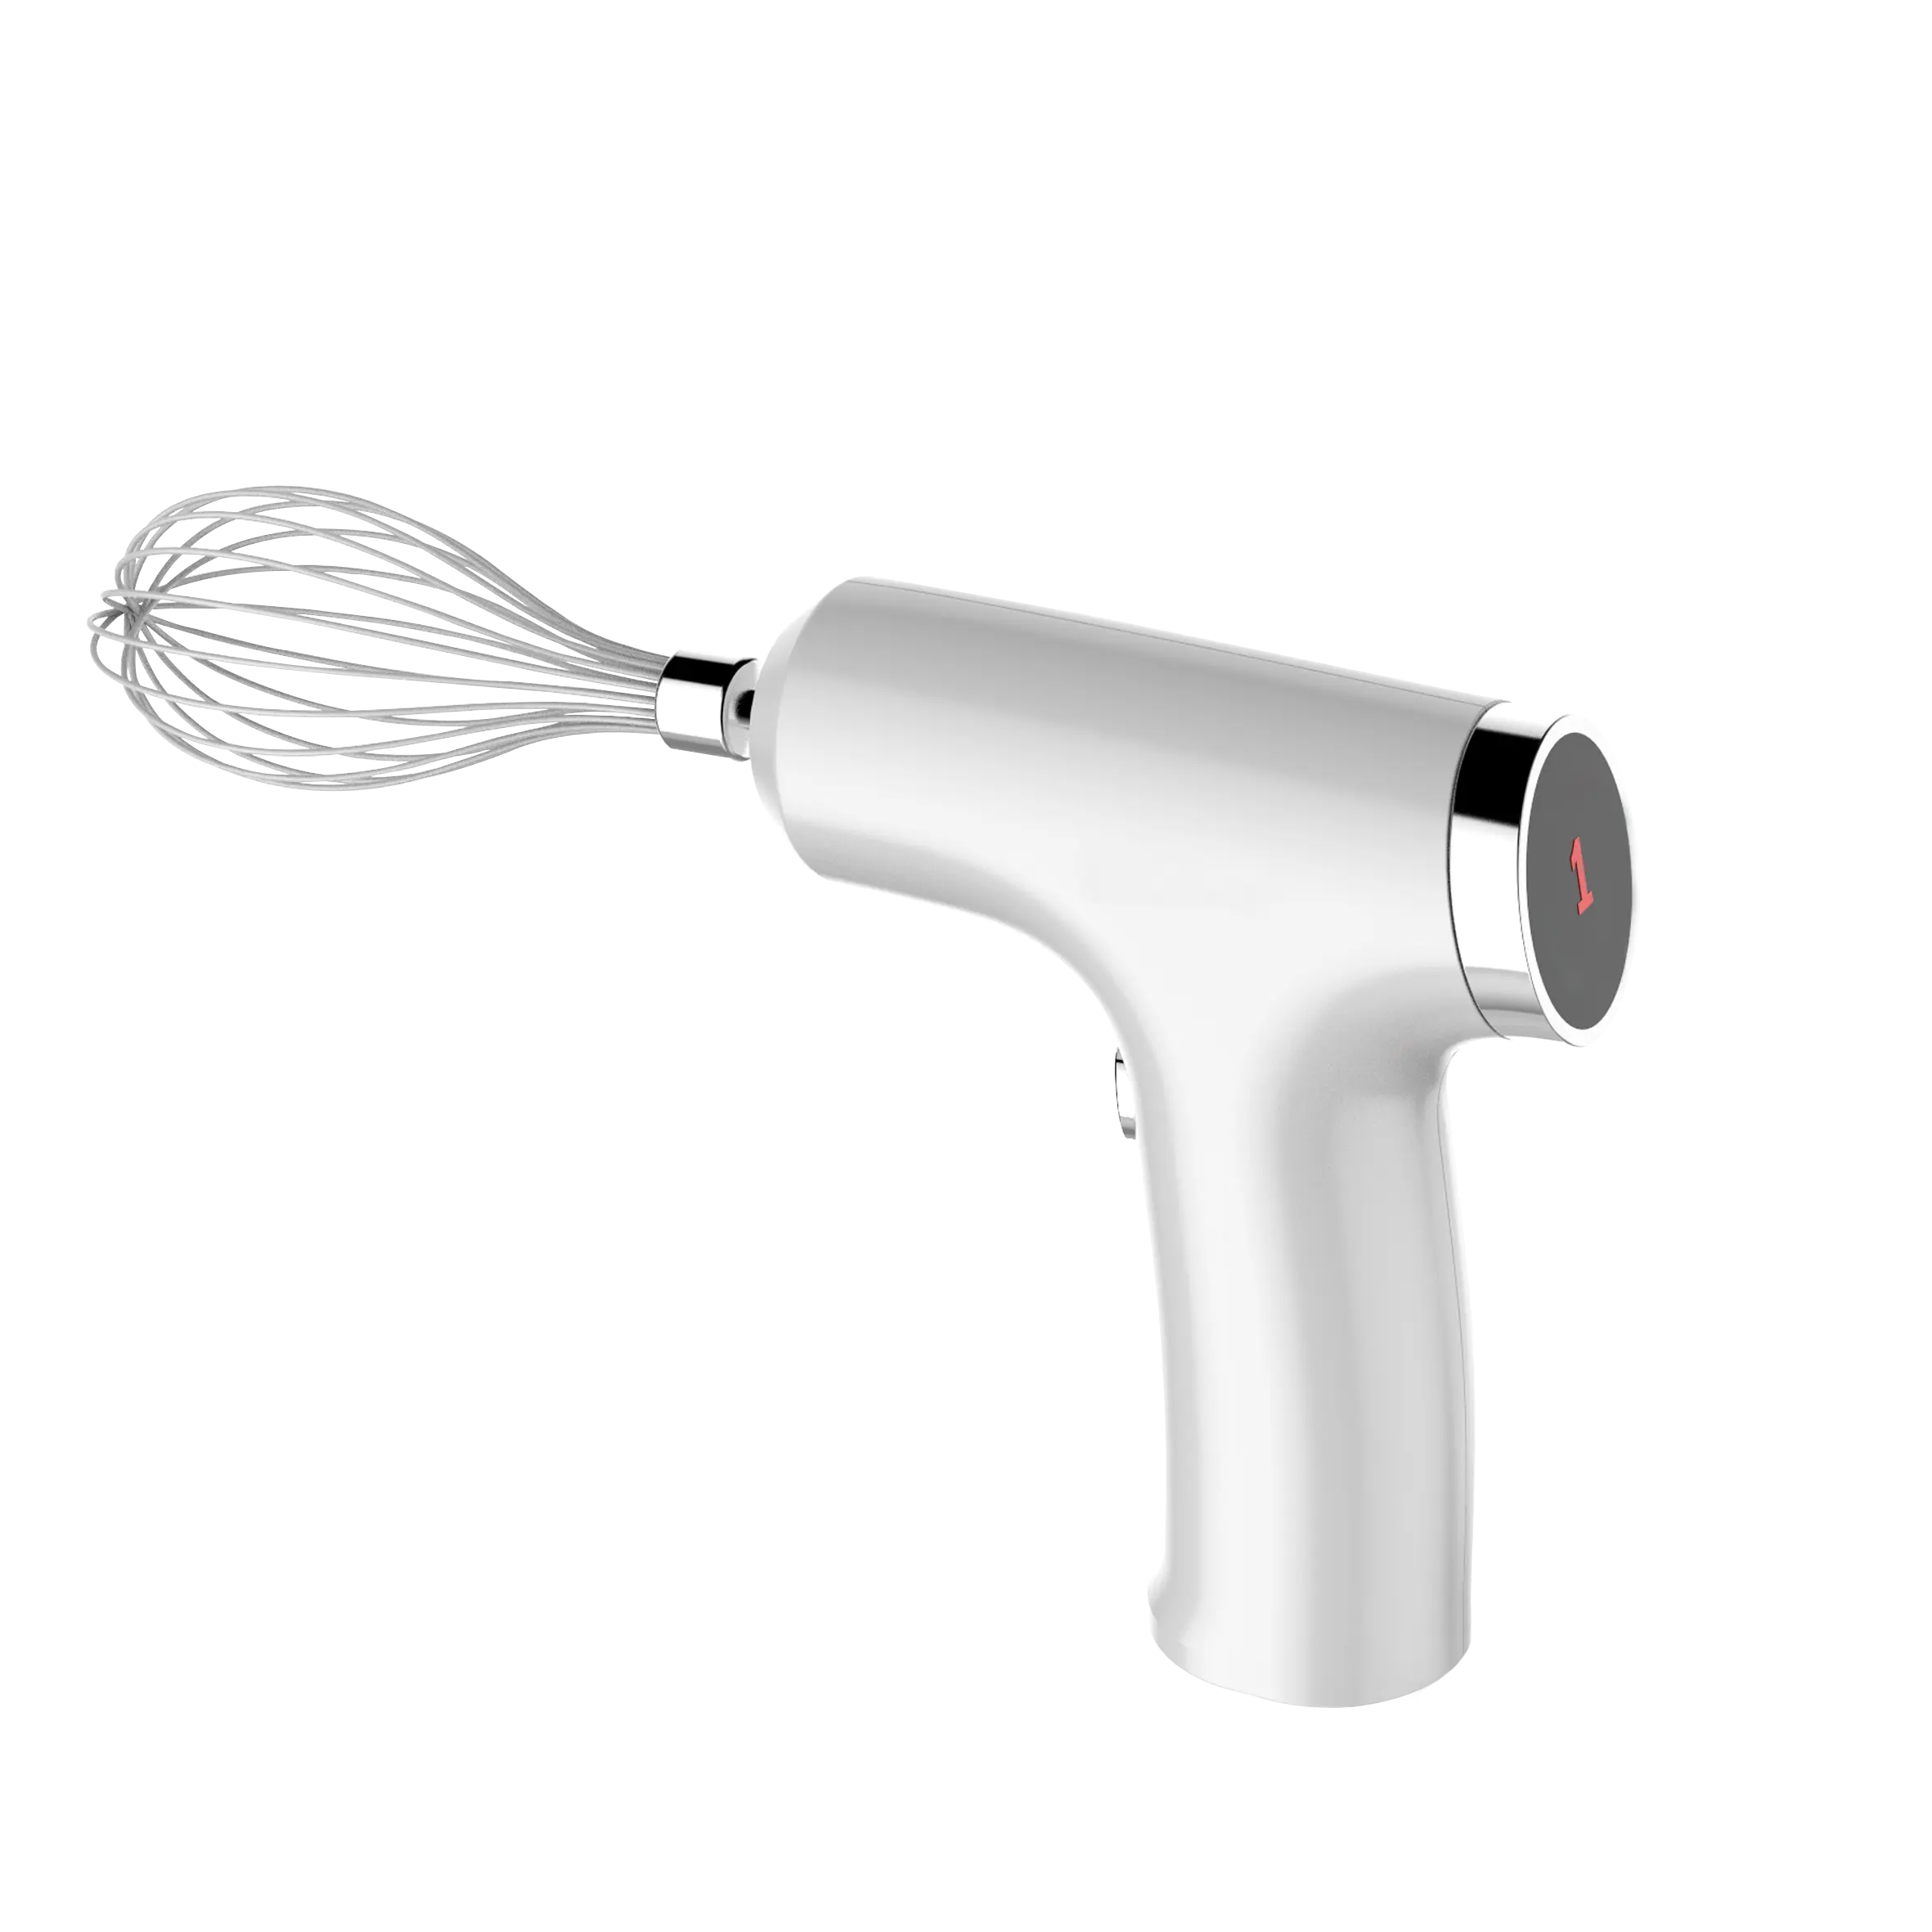 CX-8816 Electric hand-held whisk egg mixer household baking mini cream whisk